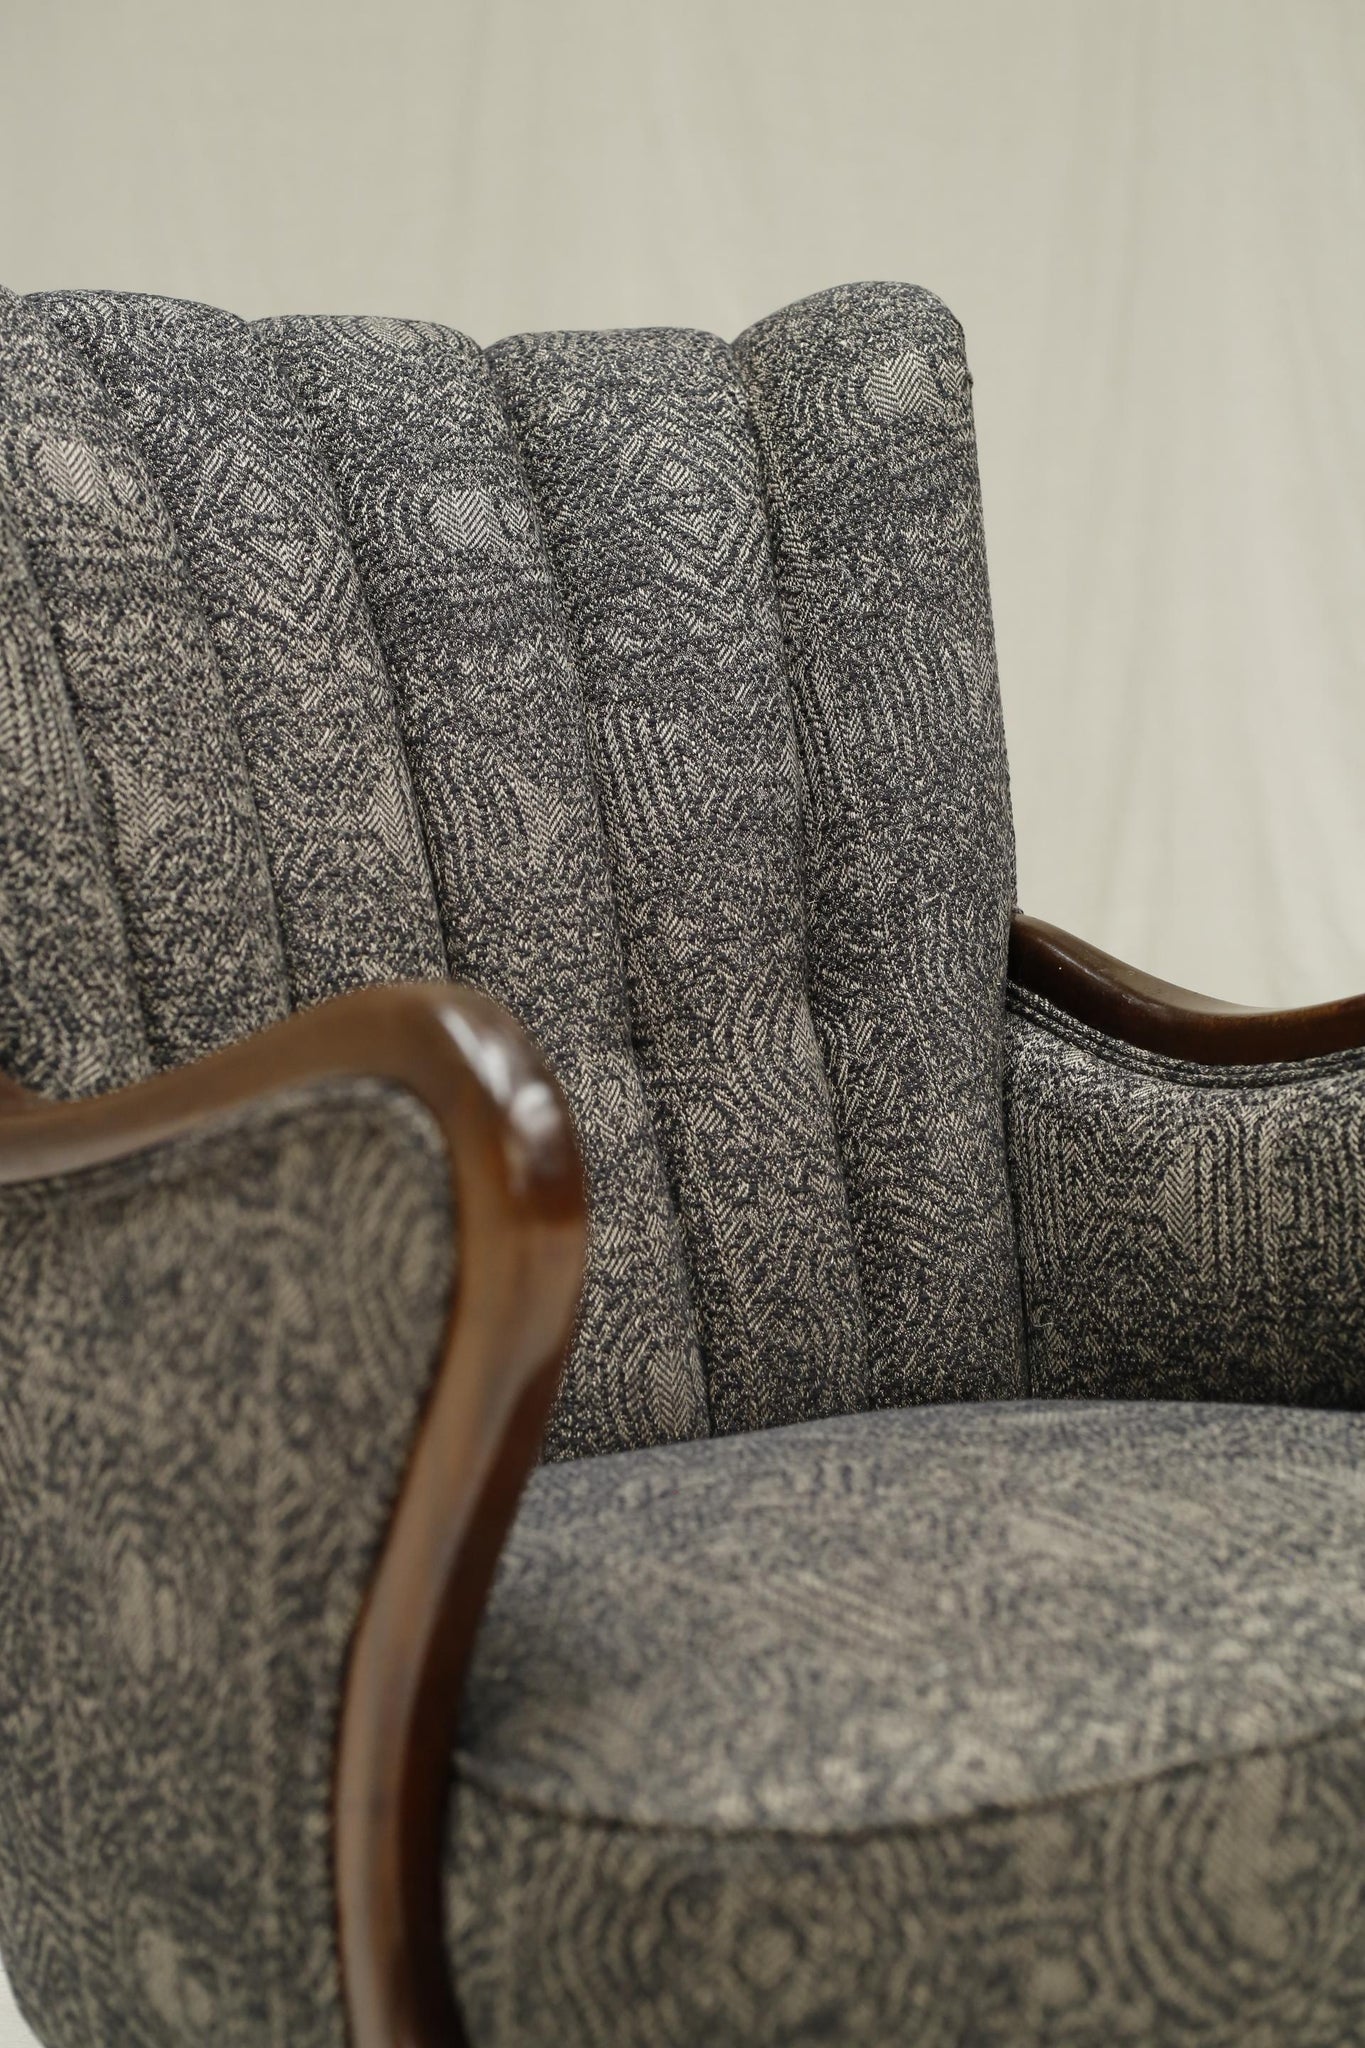 Mid century Swedish armchair in Black textured fabric - TallBoy Interiors